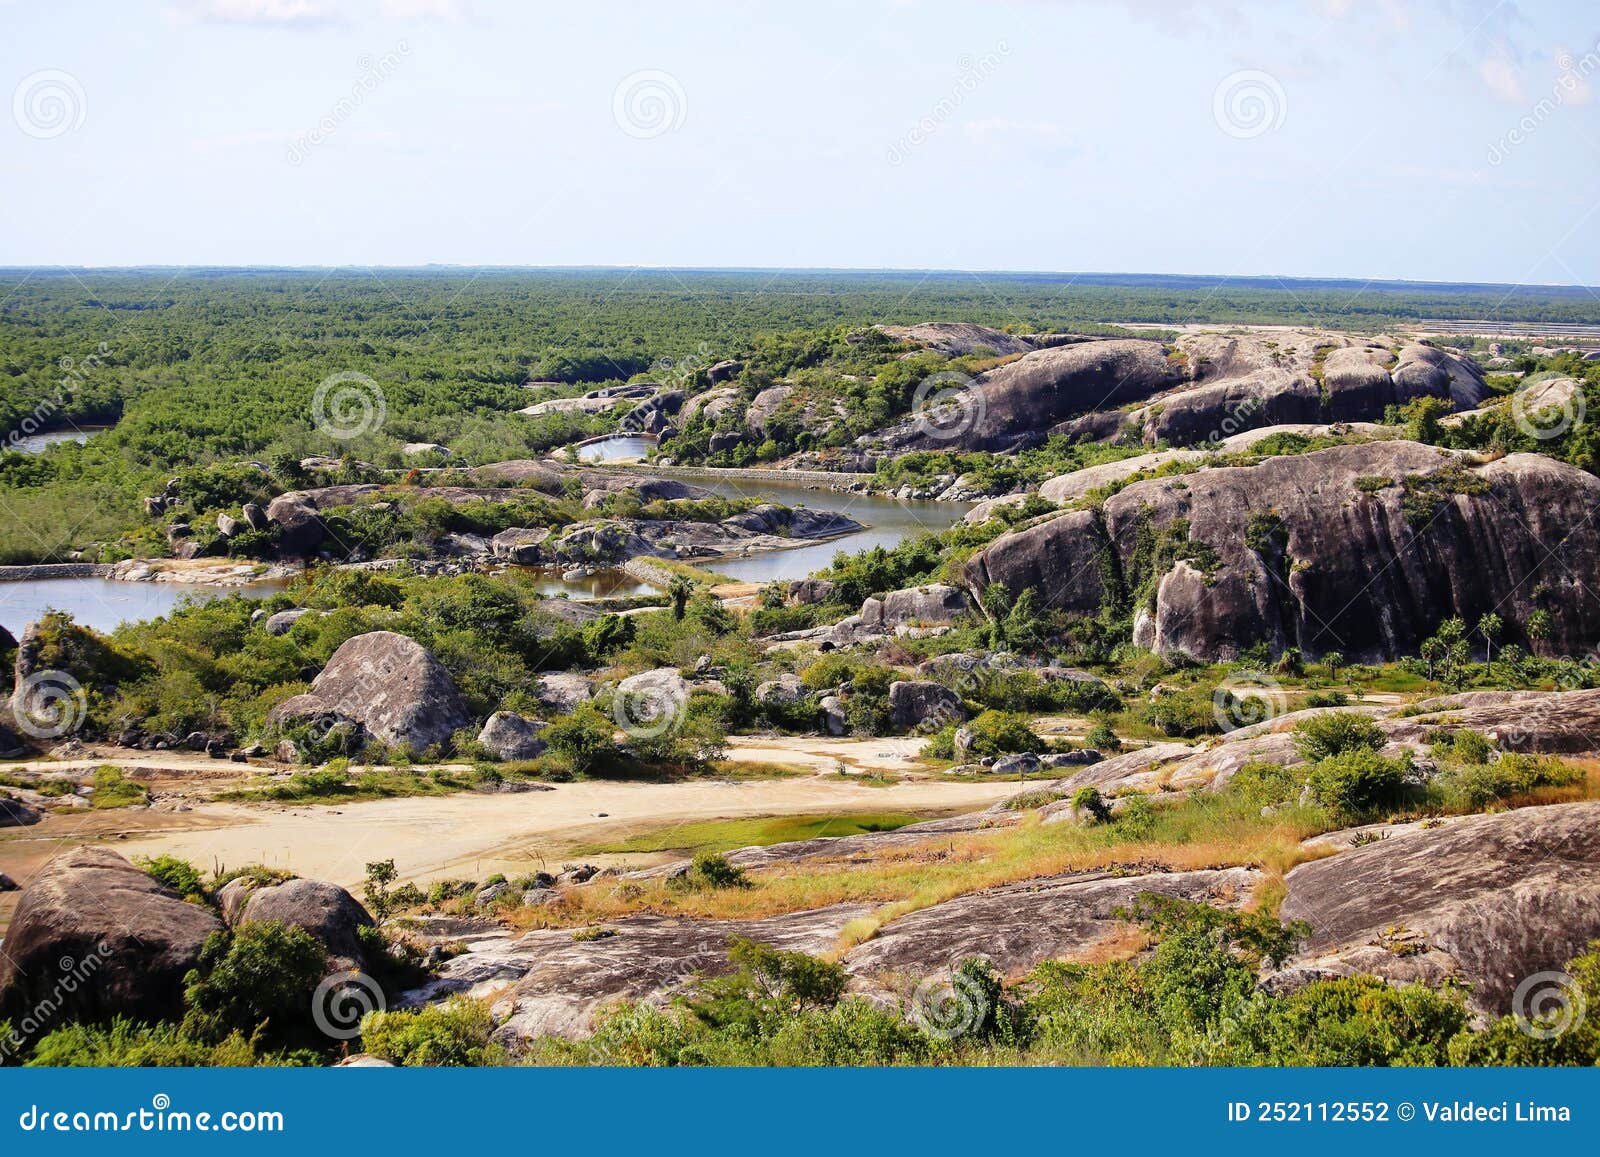 rocks surrounded by green vegetation, chaval city, maranhao